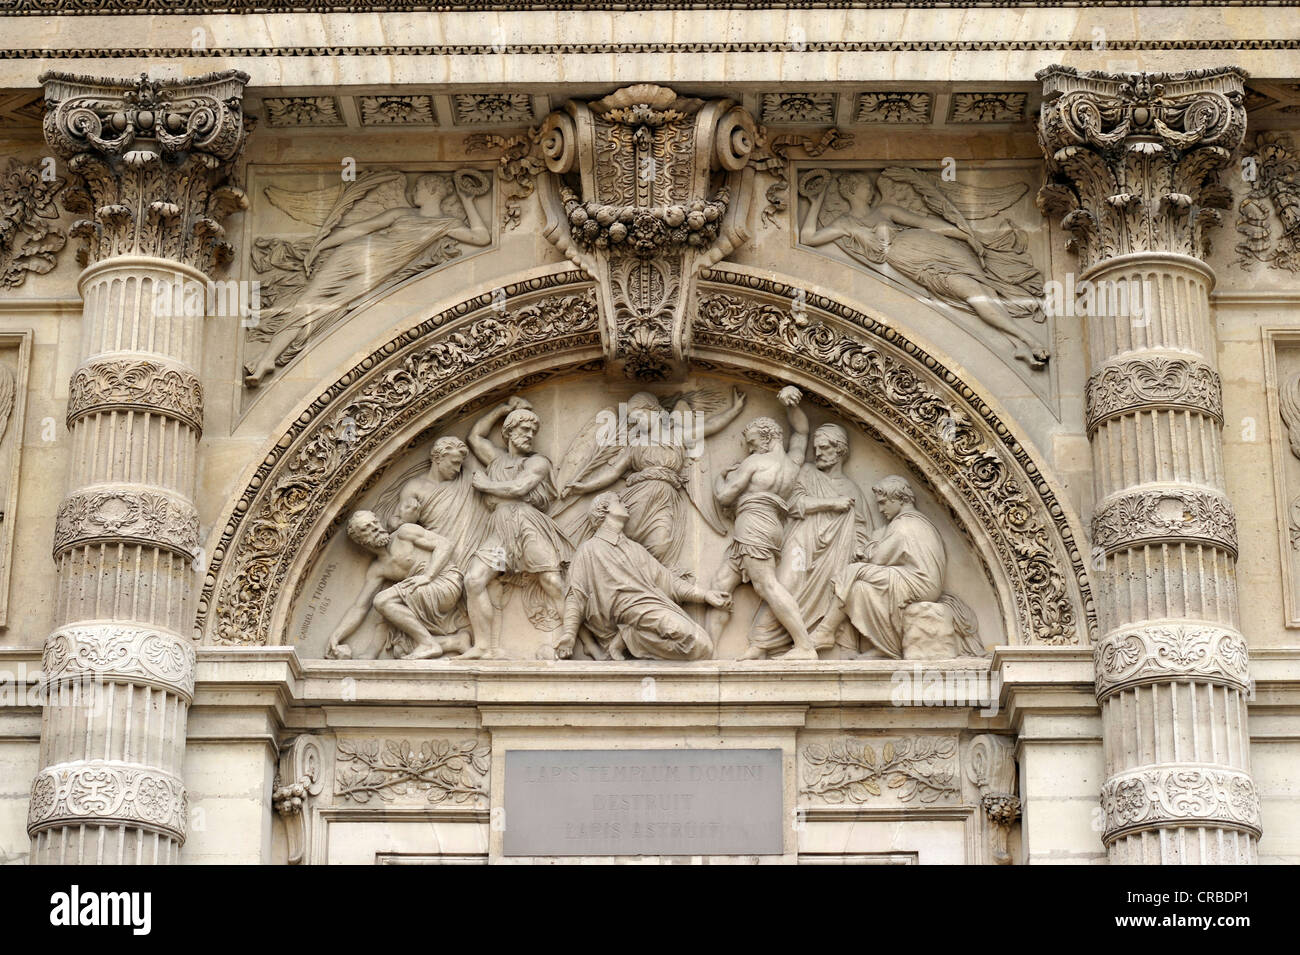 Portale principale della parrocchia vhurch di Saint-Etienne-du-Mont, Montagne Sainte-Genevieve, Parigi, Francia, Europa PublicGround Foto Stock